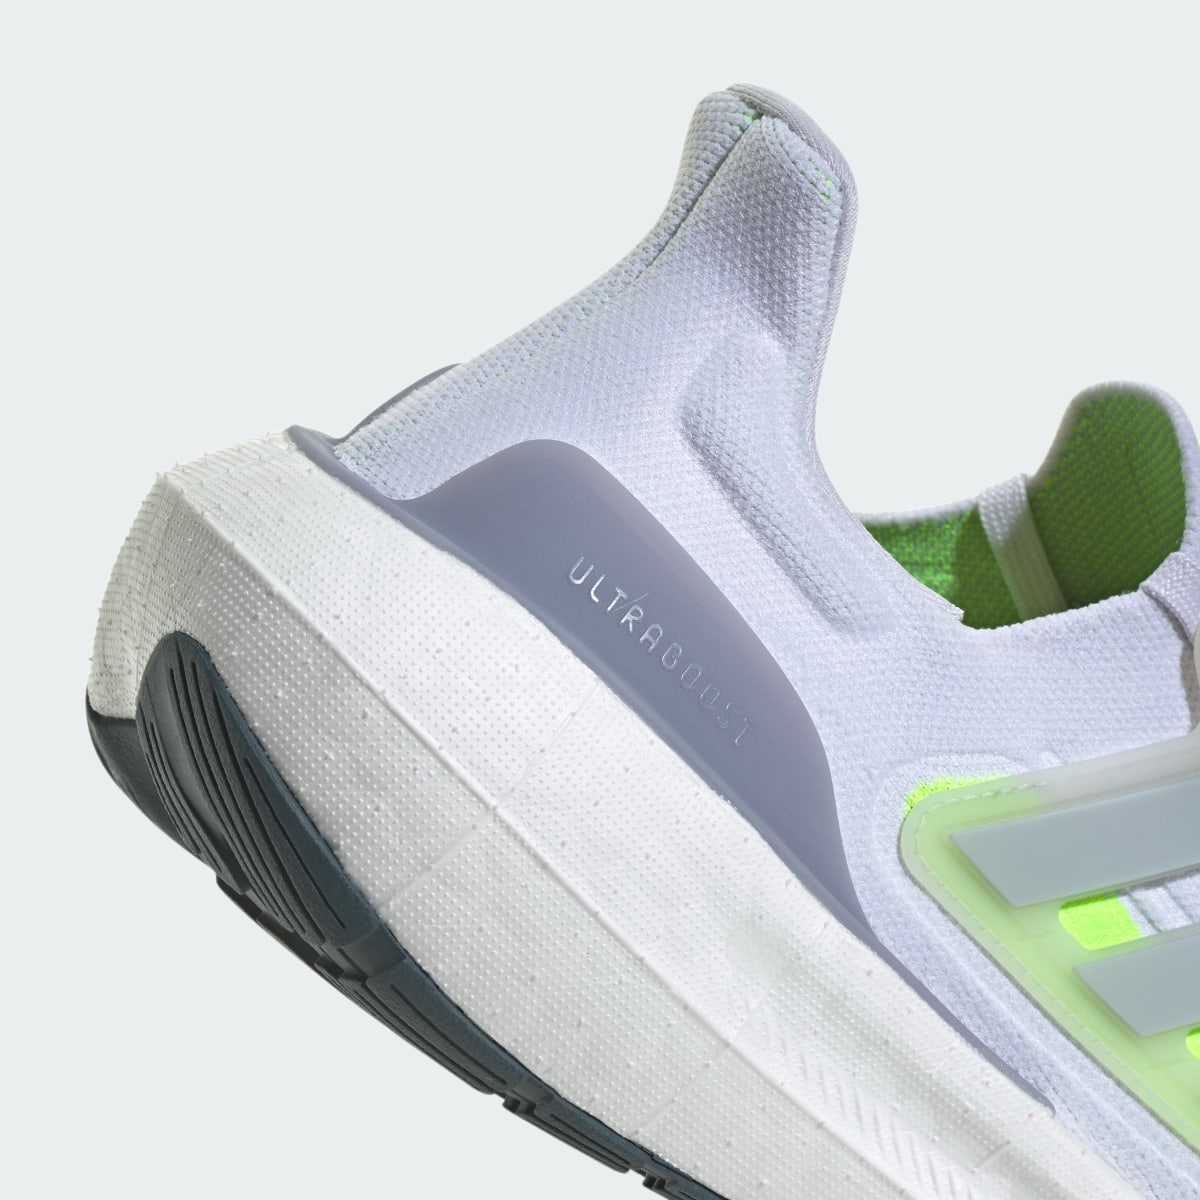 Adidas Ultraboost Light Shoes. 10